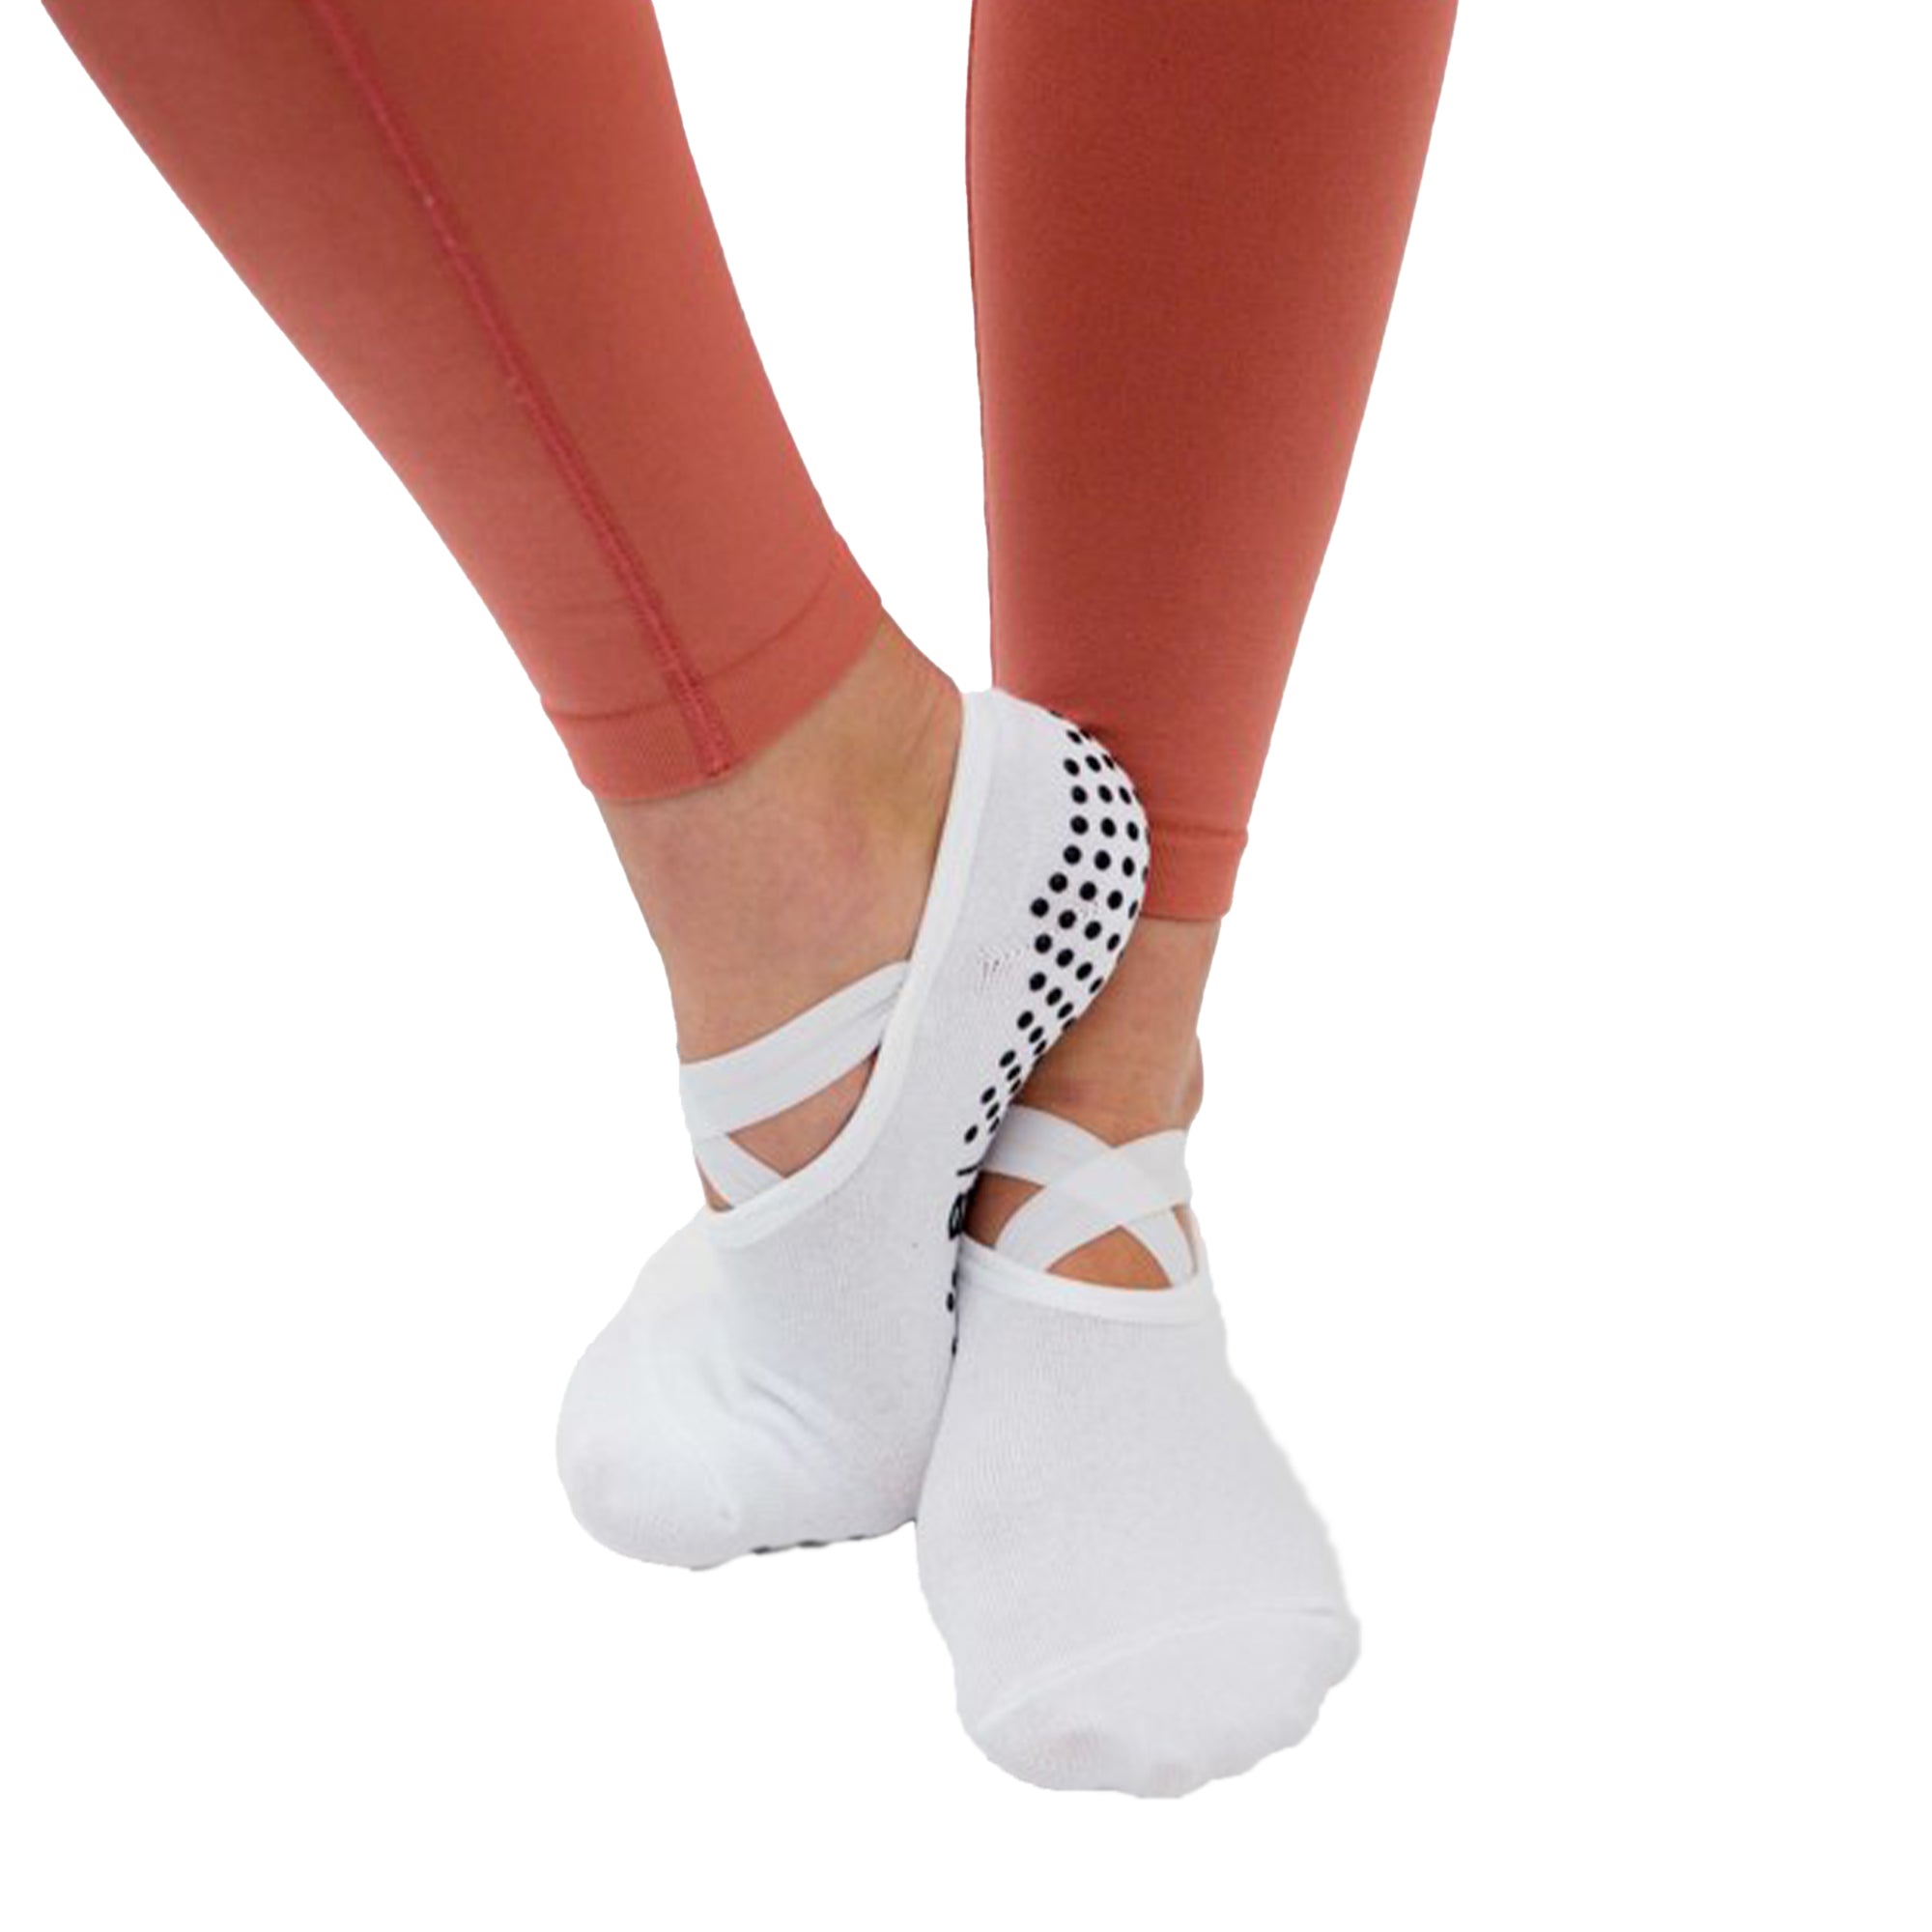 Yoga Socks Australia Bundle  Toeless - SOCK IT AND CO.®